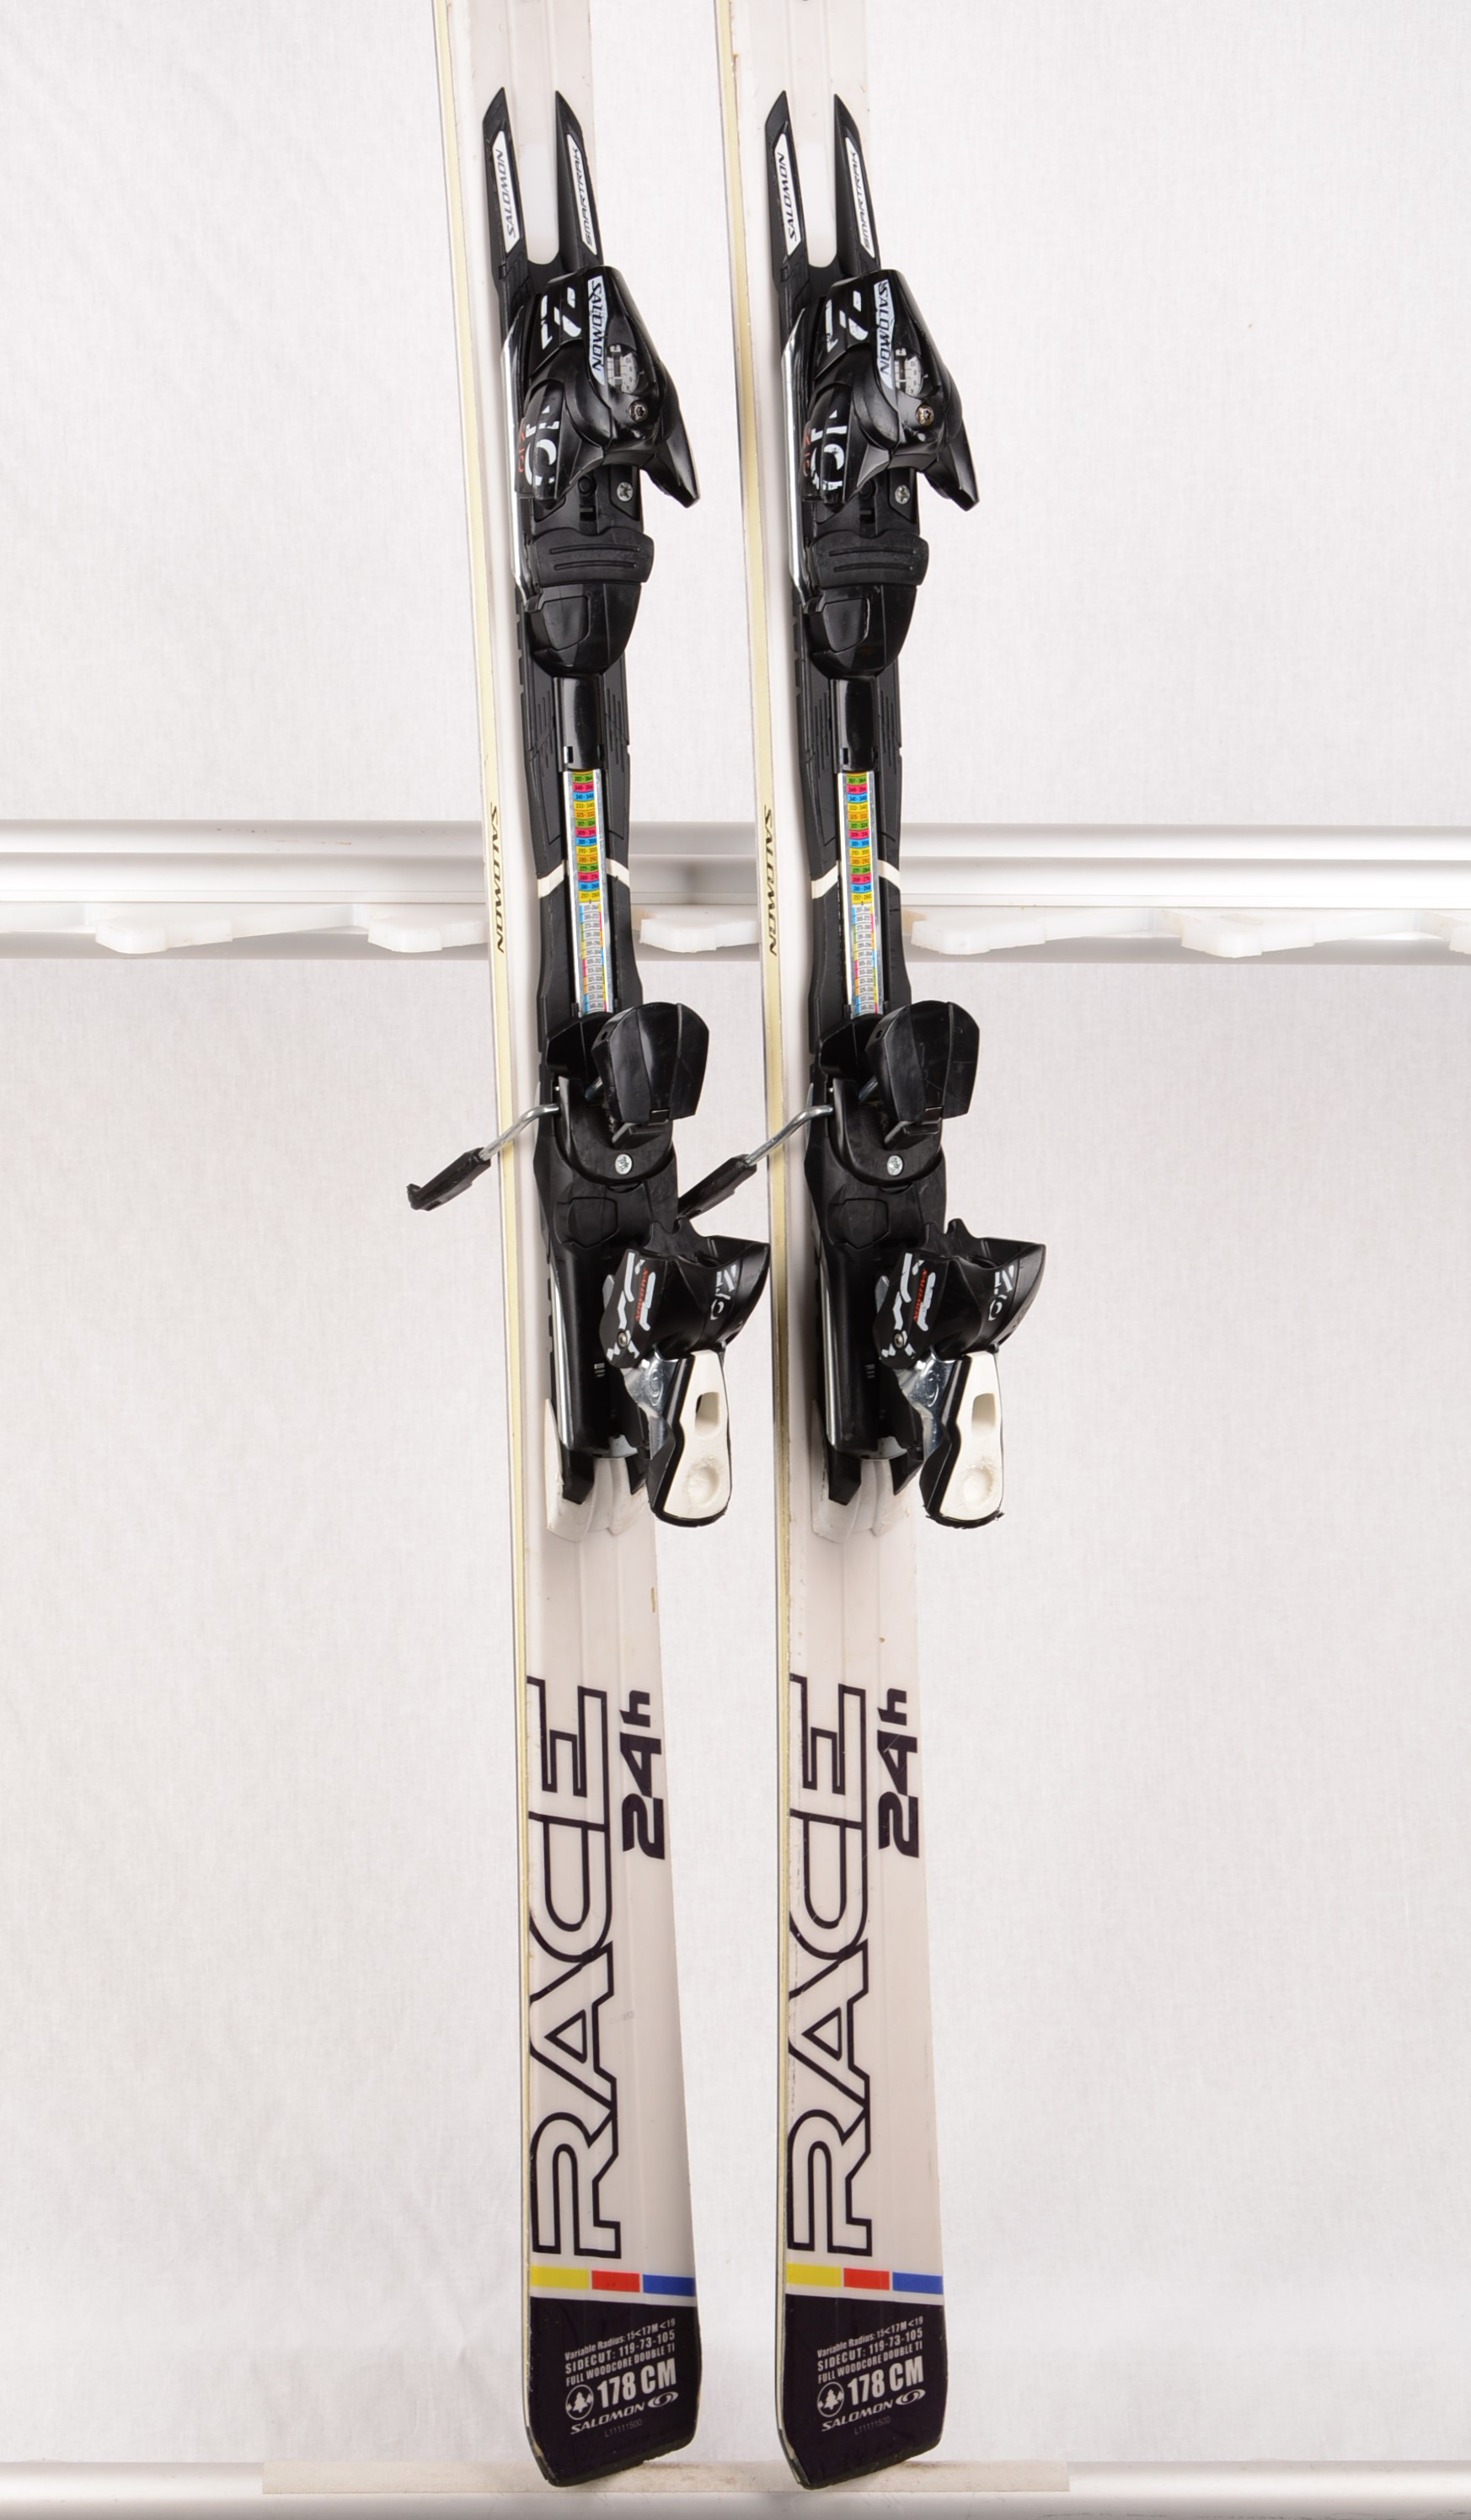 skis 24 RACE white, POWERLINE, TITANIUM, FULL WOODCORE + Salomon Z10 - Mardosport.com